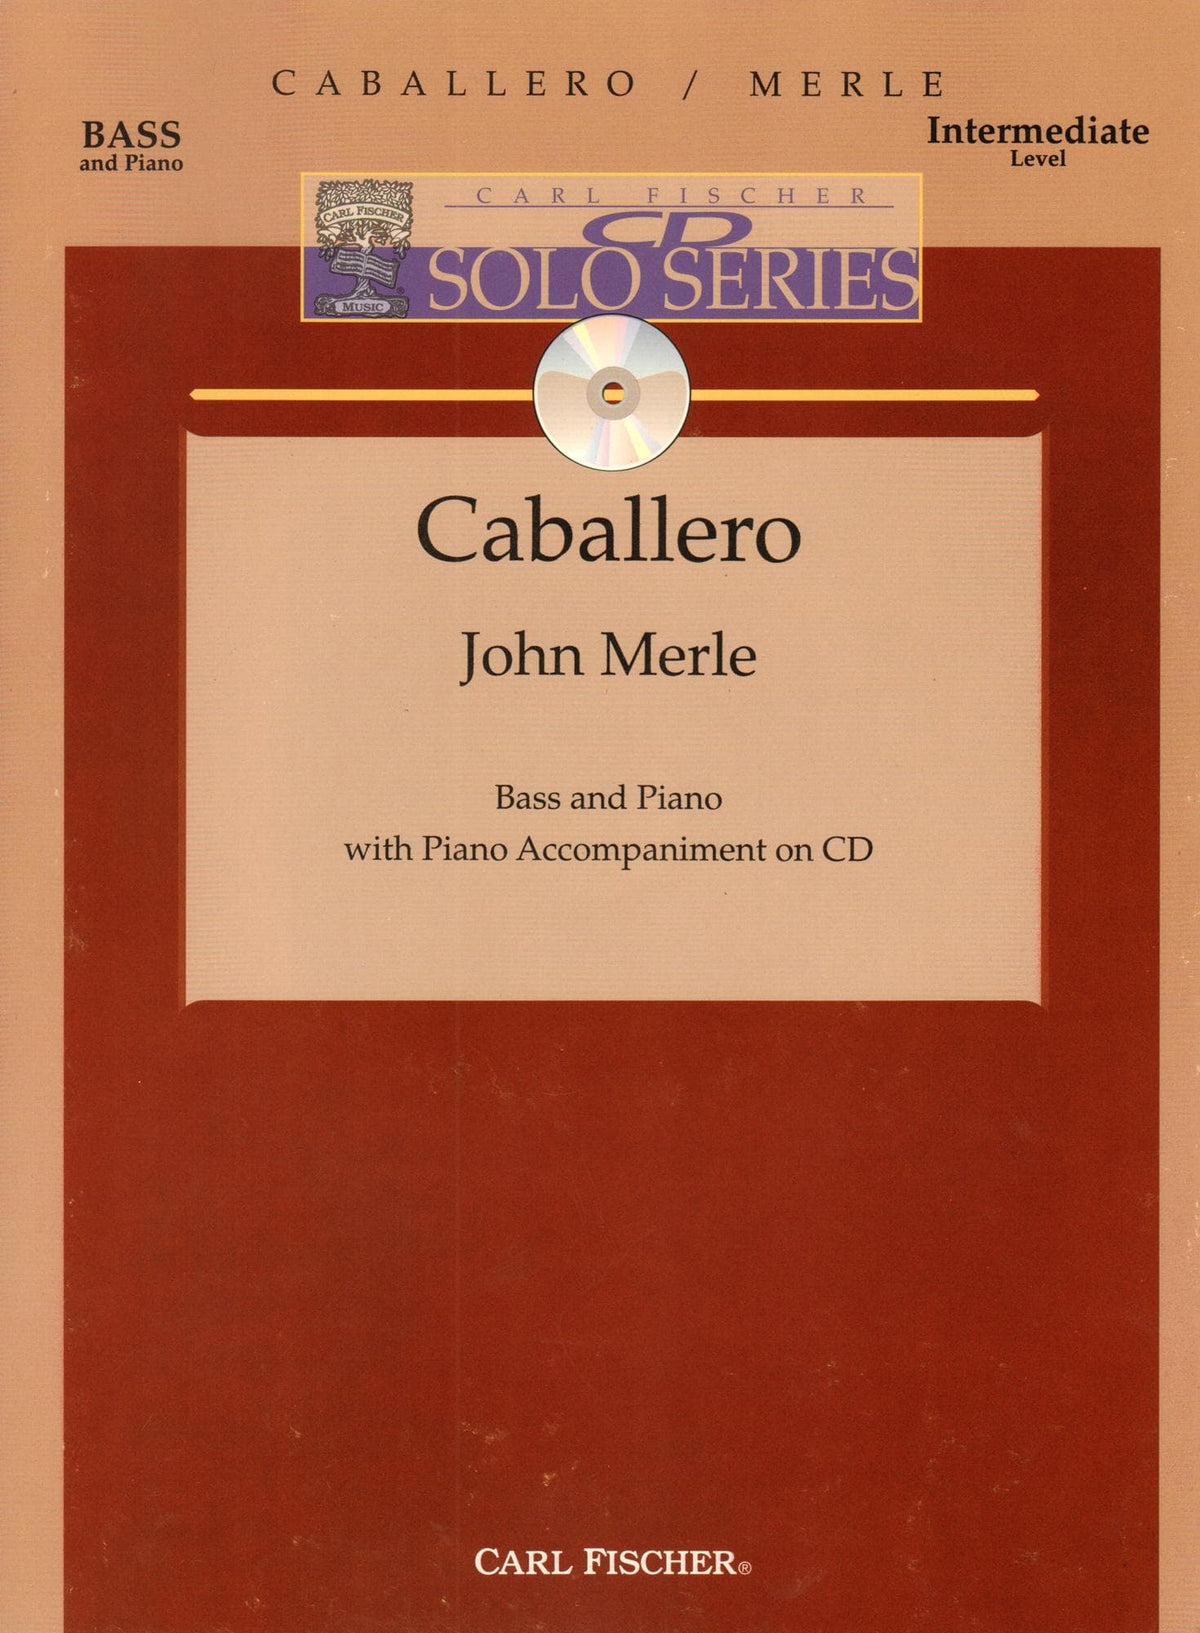 Merle, John - Caballero - Bass and Piano - Book/CD set - Carl Fischer Edition